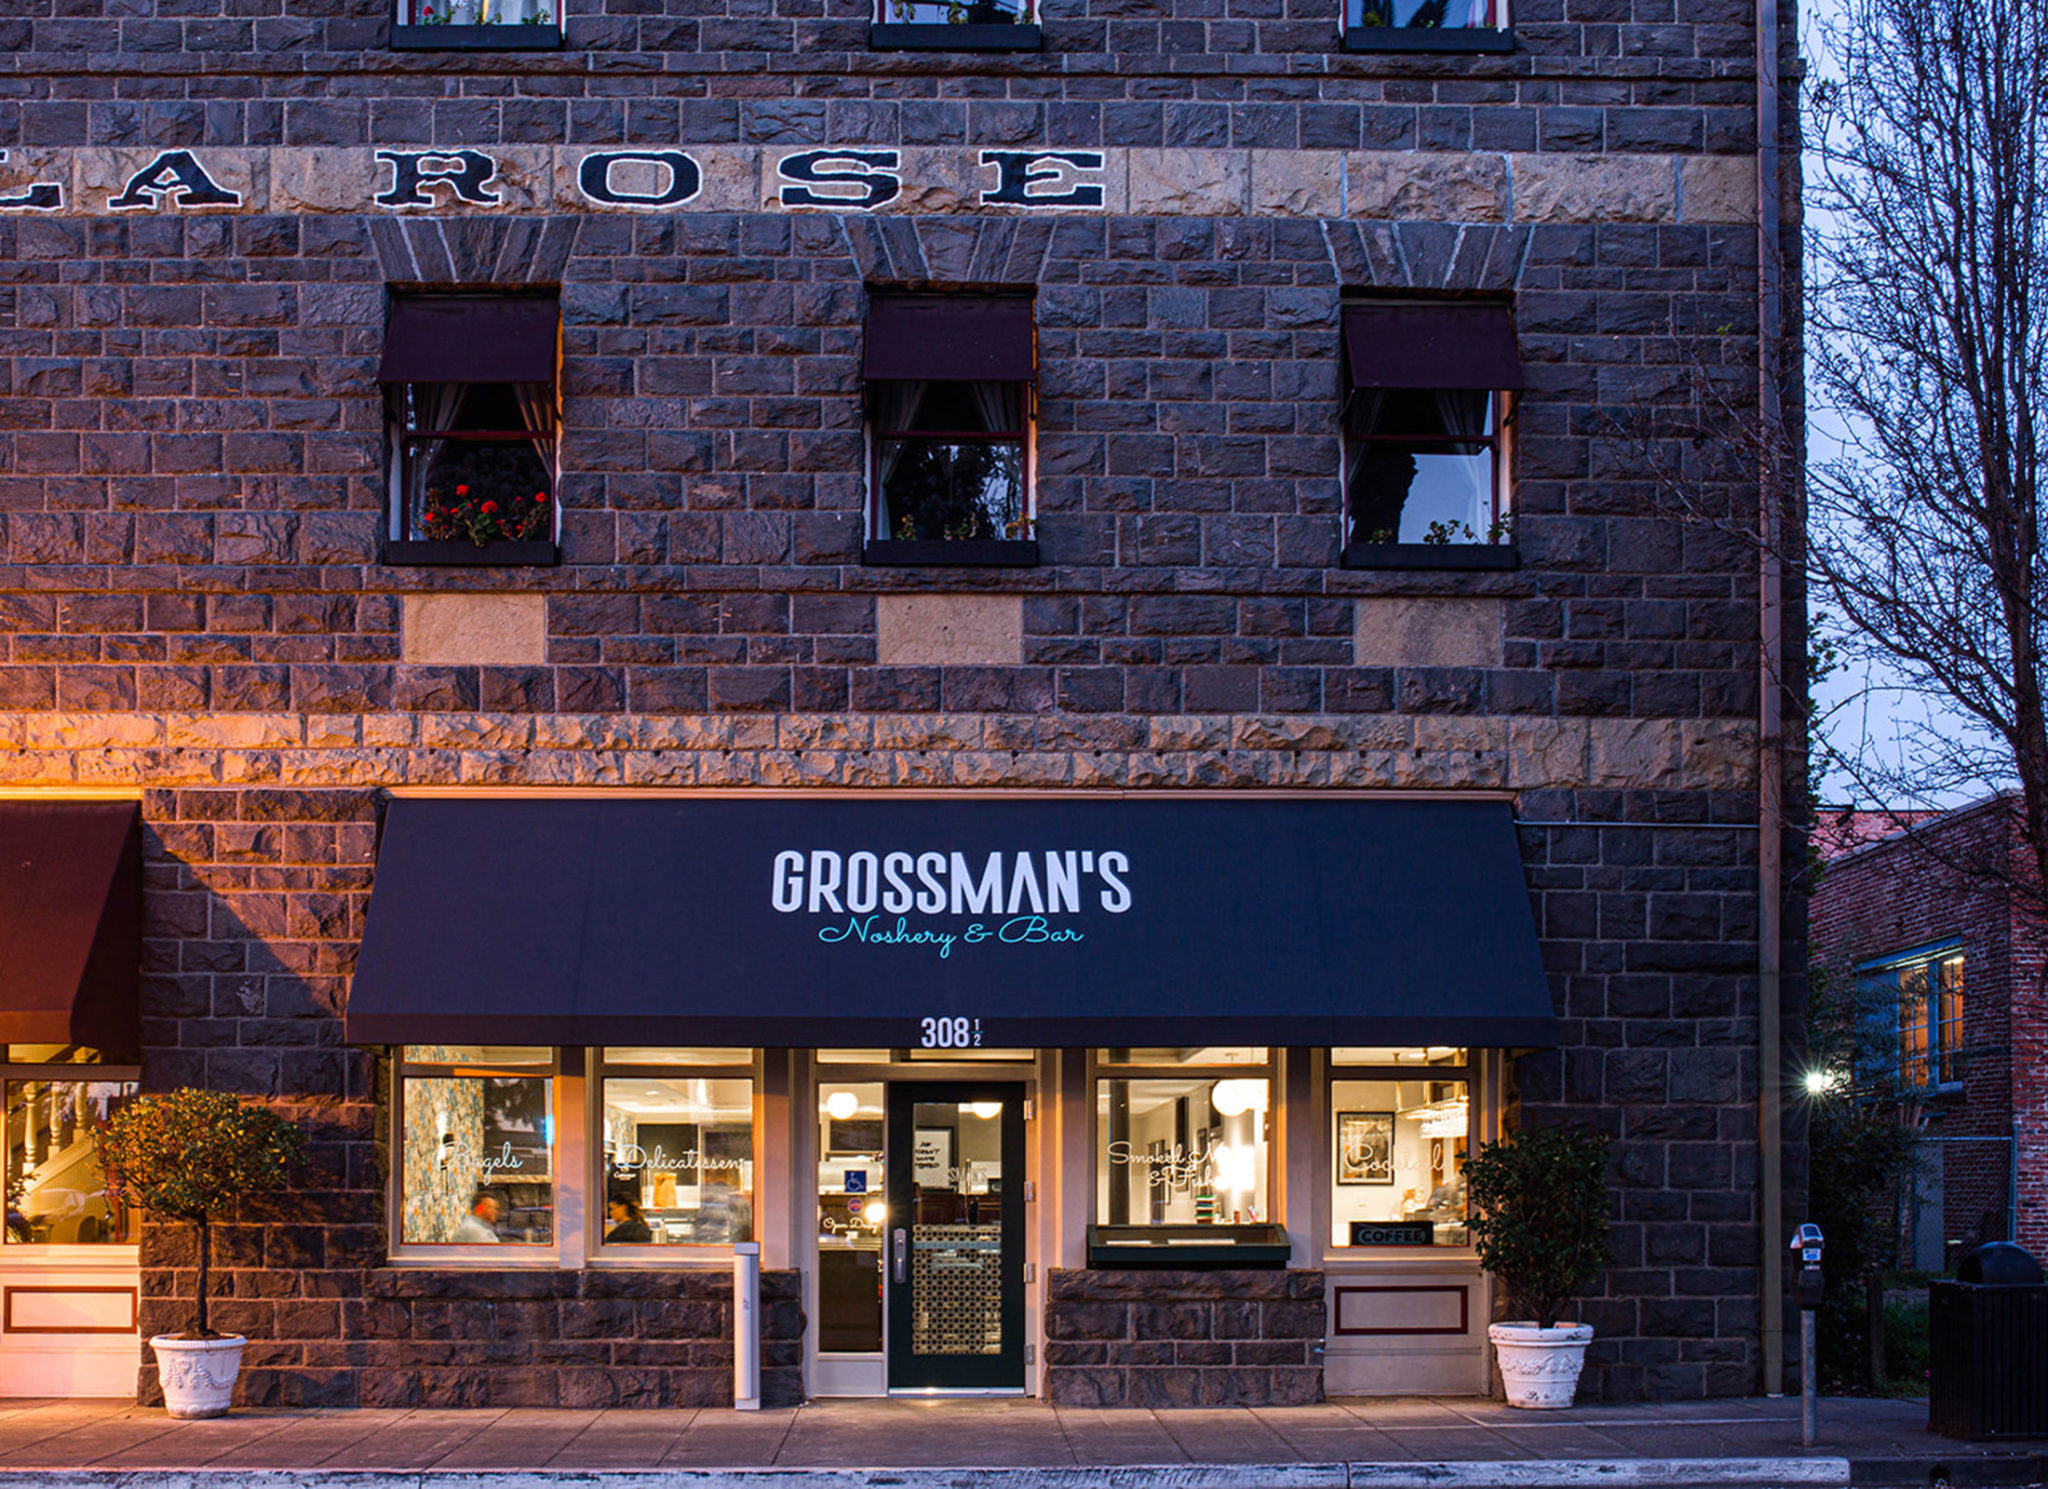 Grossman's Jewish deli has reopened for takeout. Photo: Loren Hansen